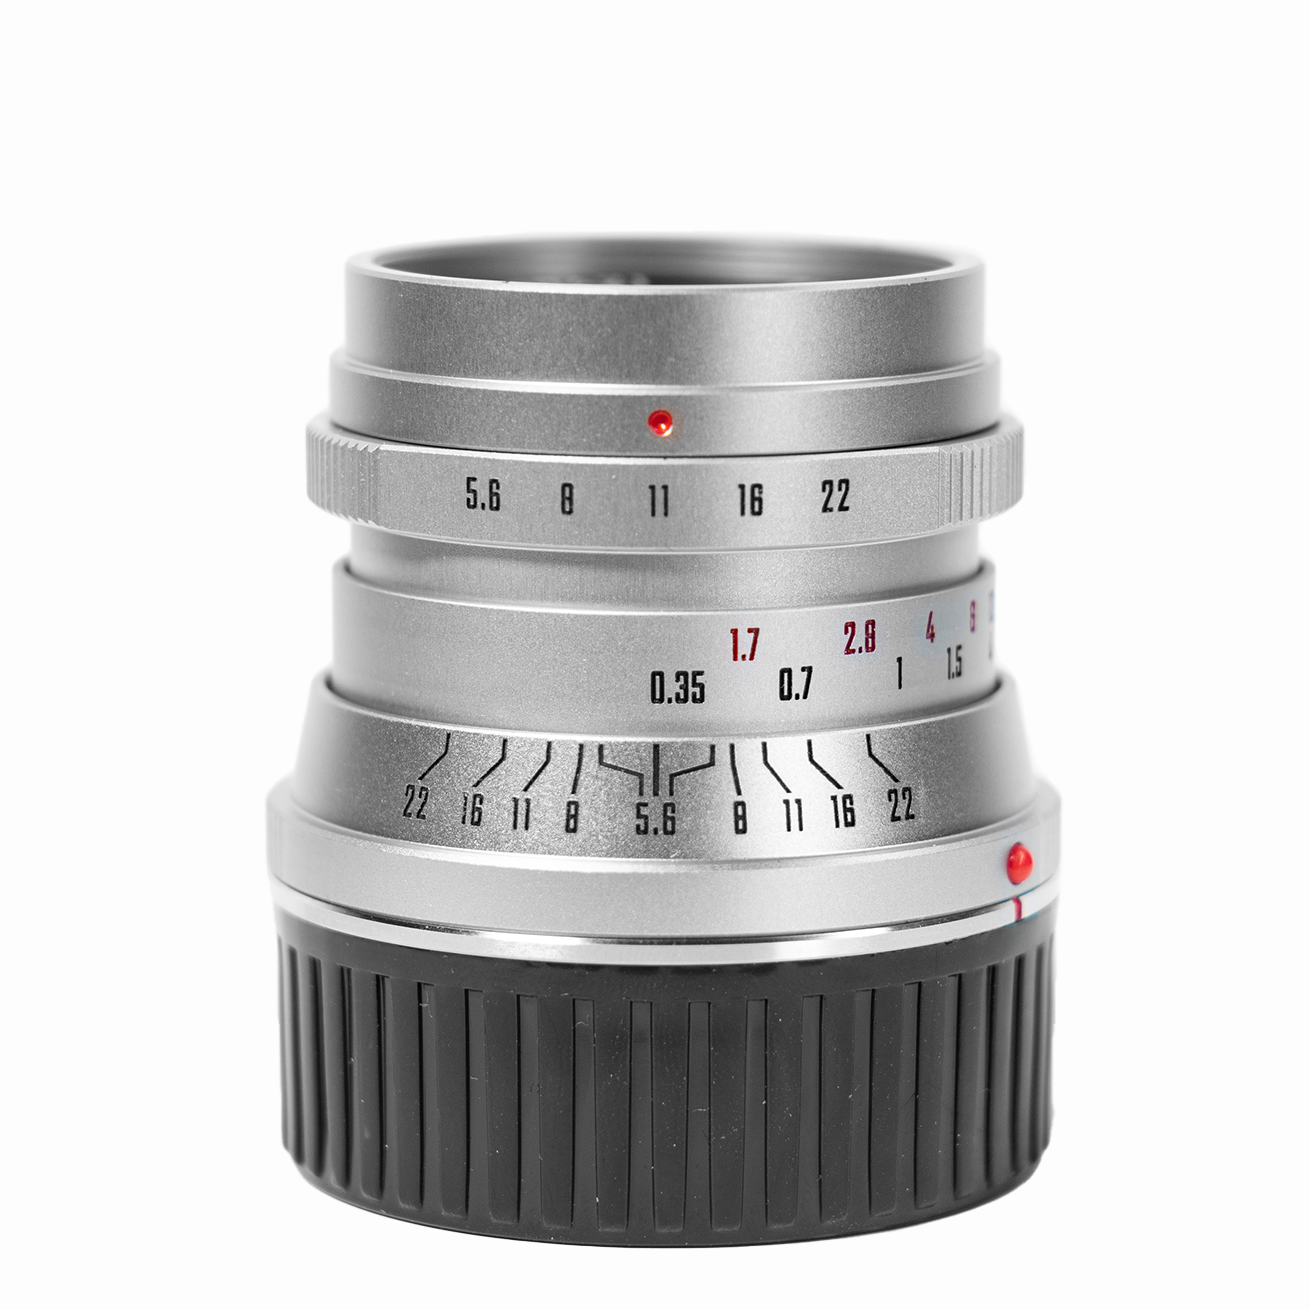 Mitakon Zhongyi Creator 28mm f/5.6 Lens for Fujifilm G